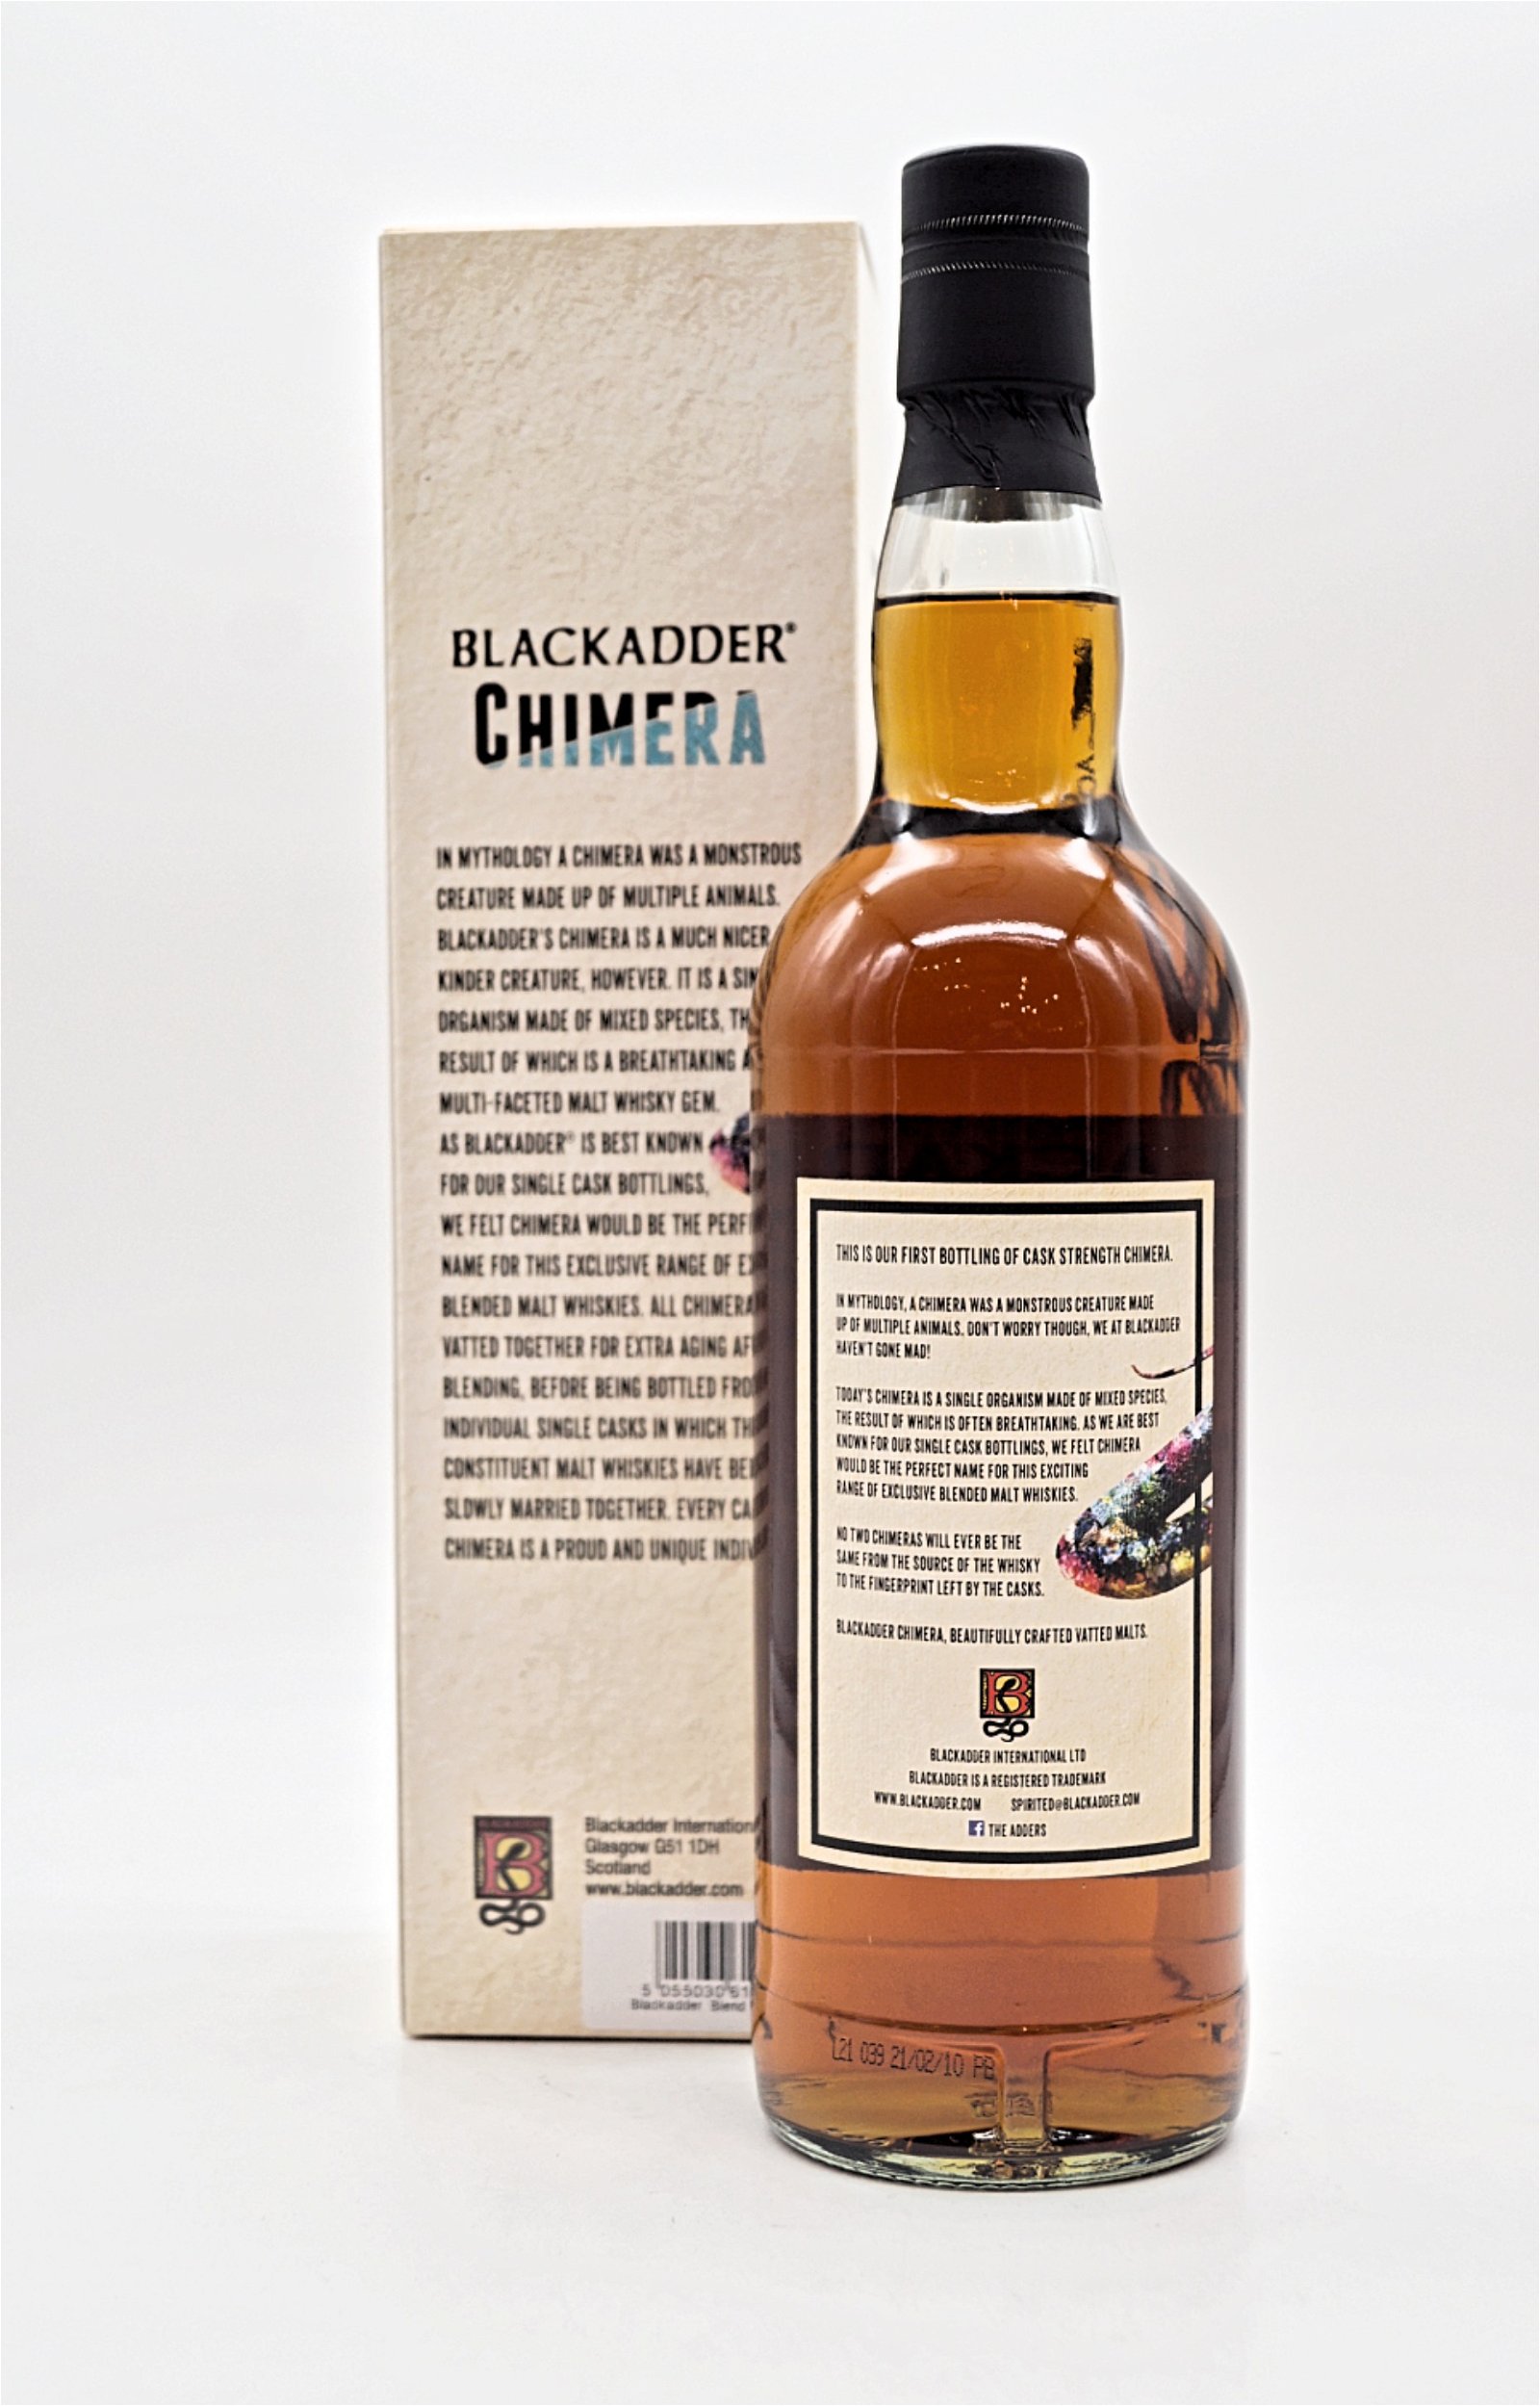 Blackadder Chimera CH 1-2021 Cask Strength Blended Malt Scotch Whisky